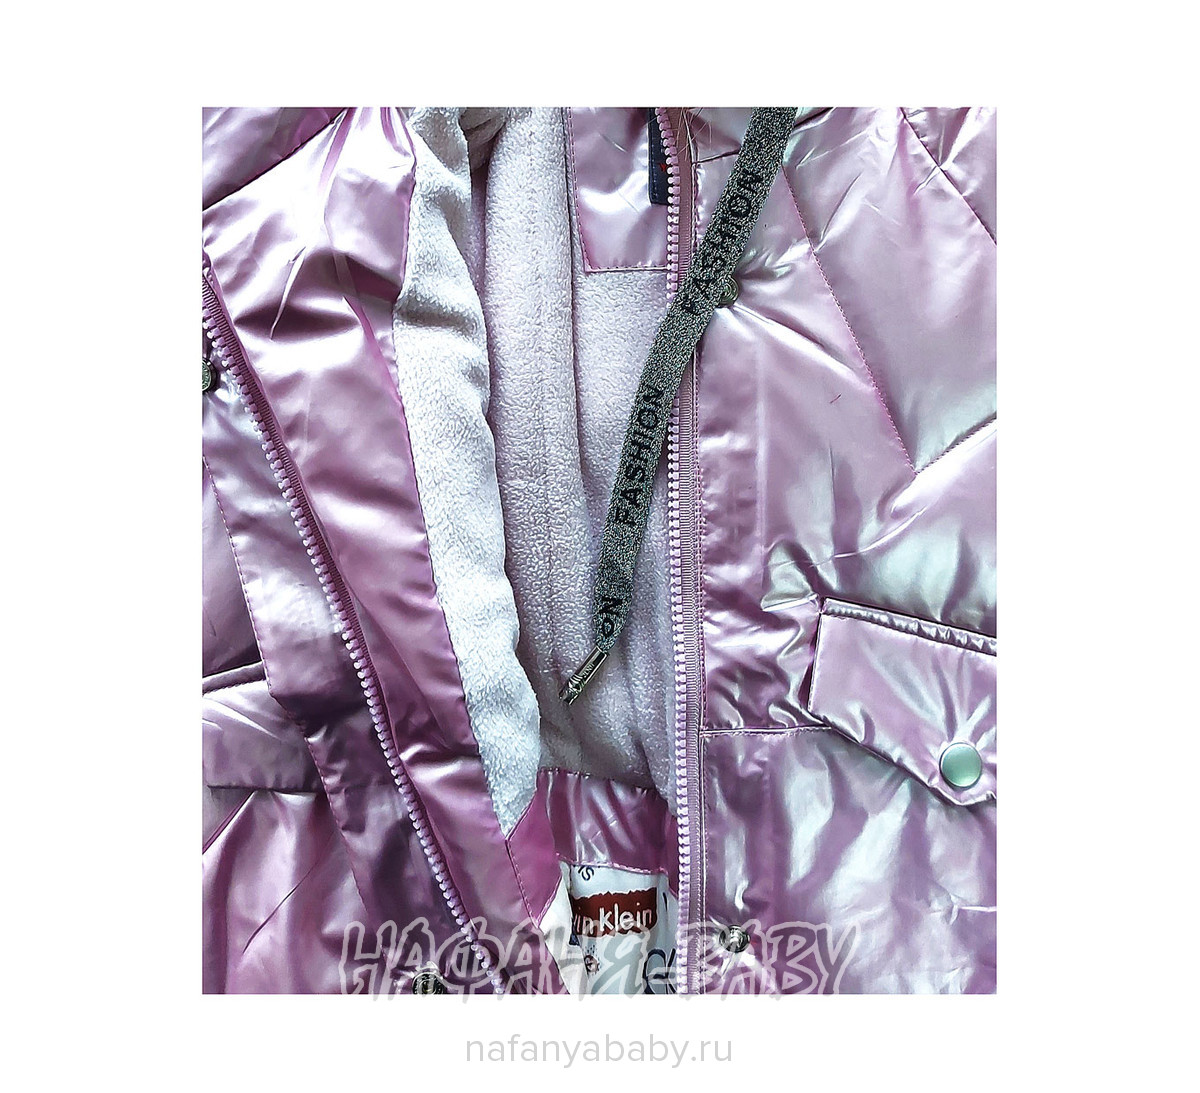 Зимняя куртка  YOI LI, купить в интернет магазине Нафаня. арт: 226.